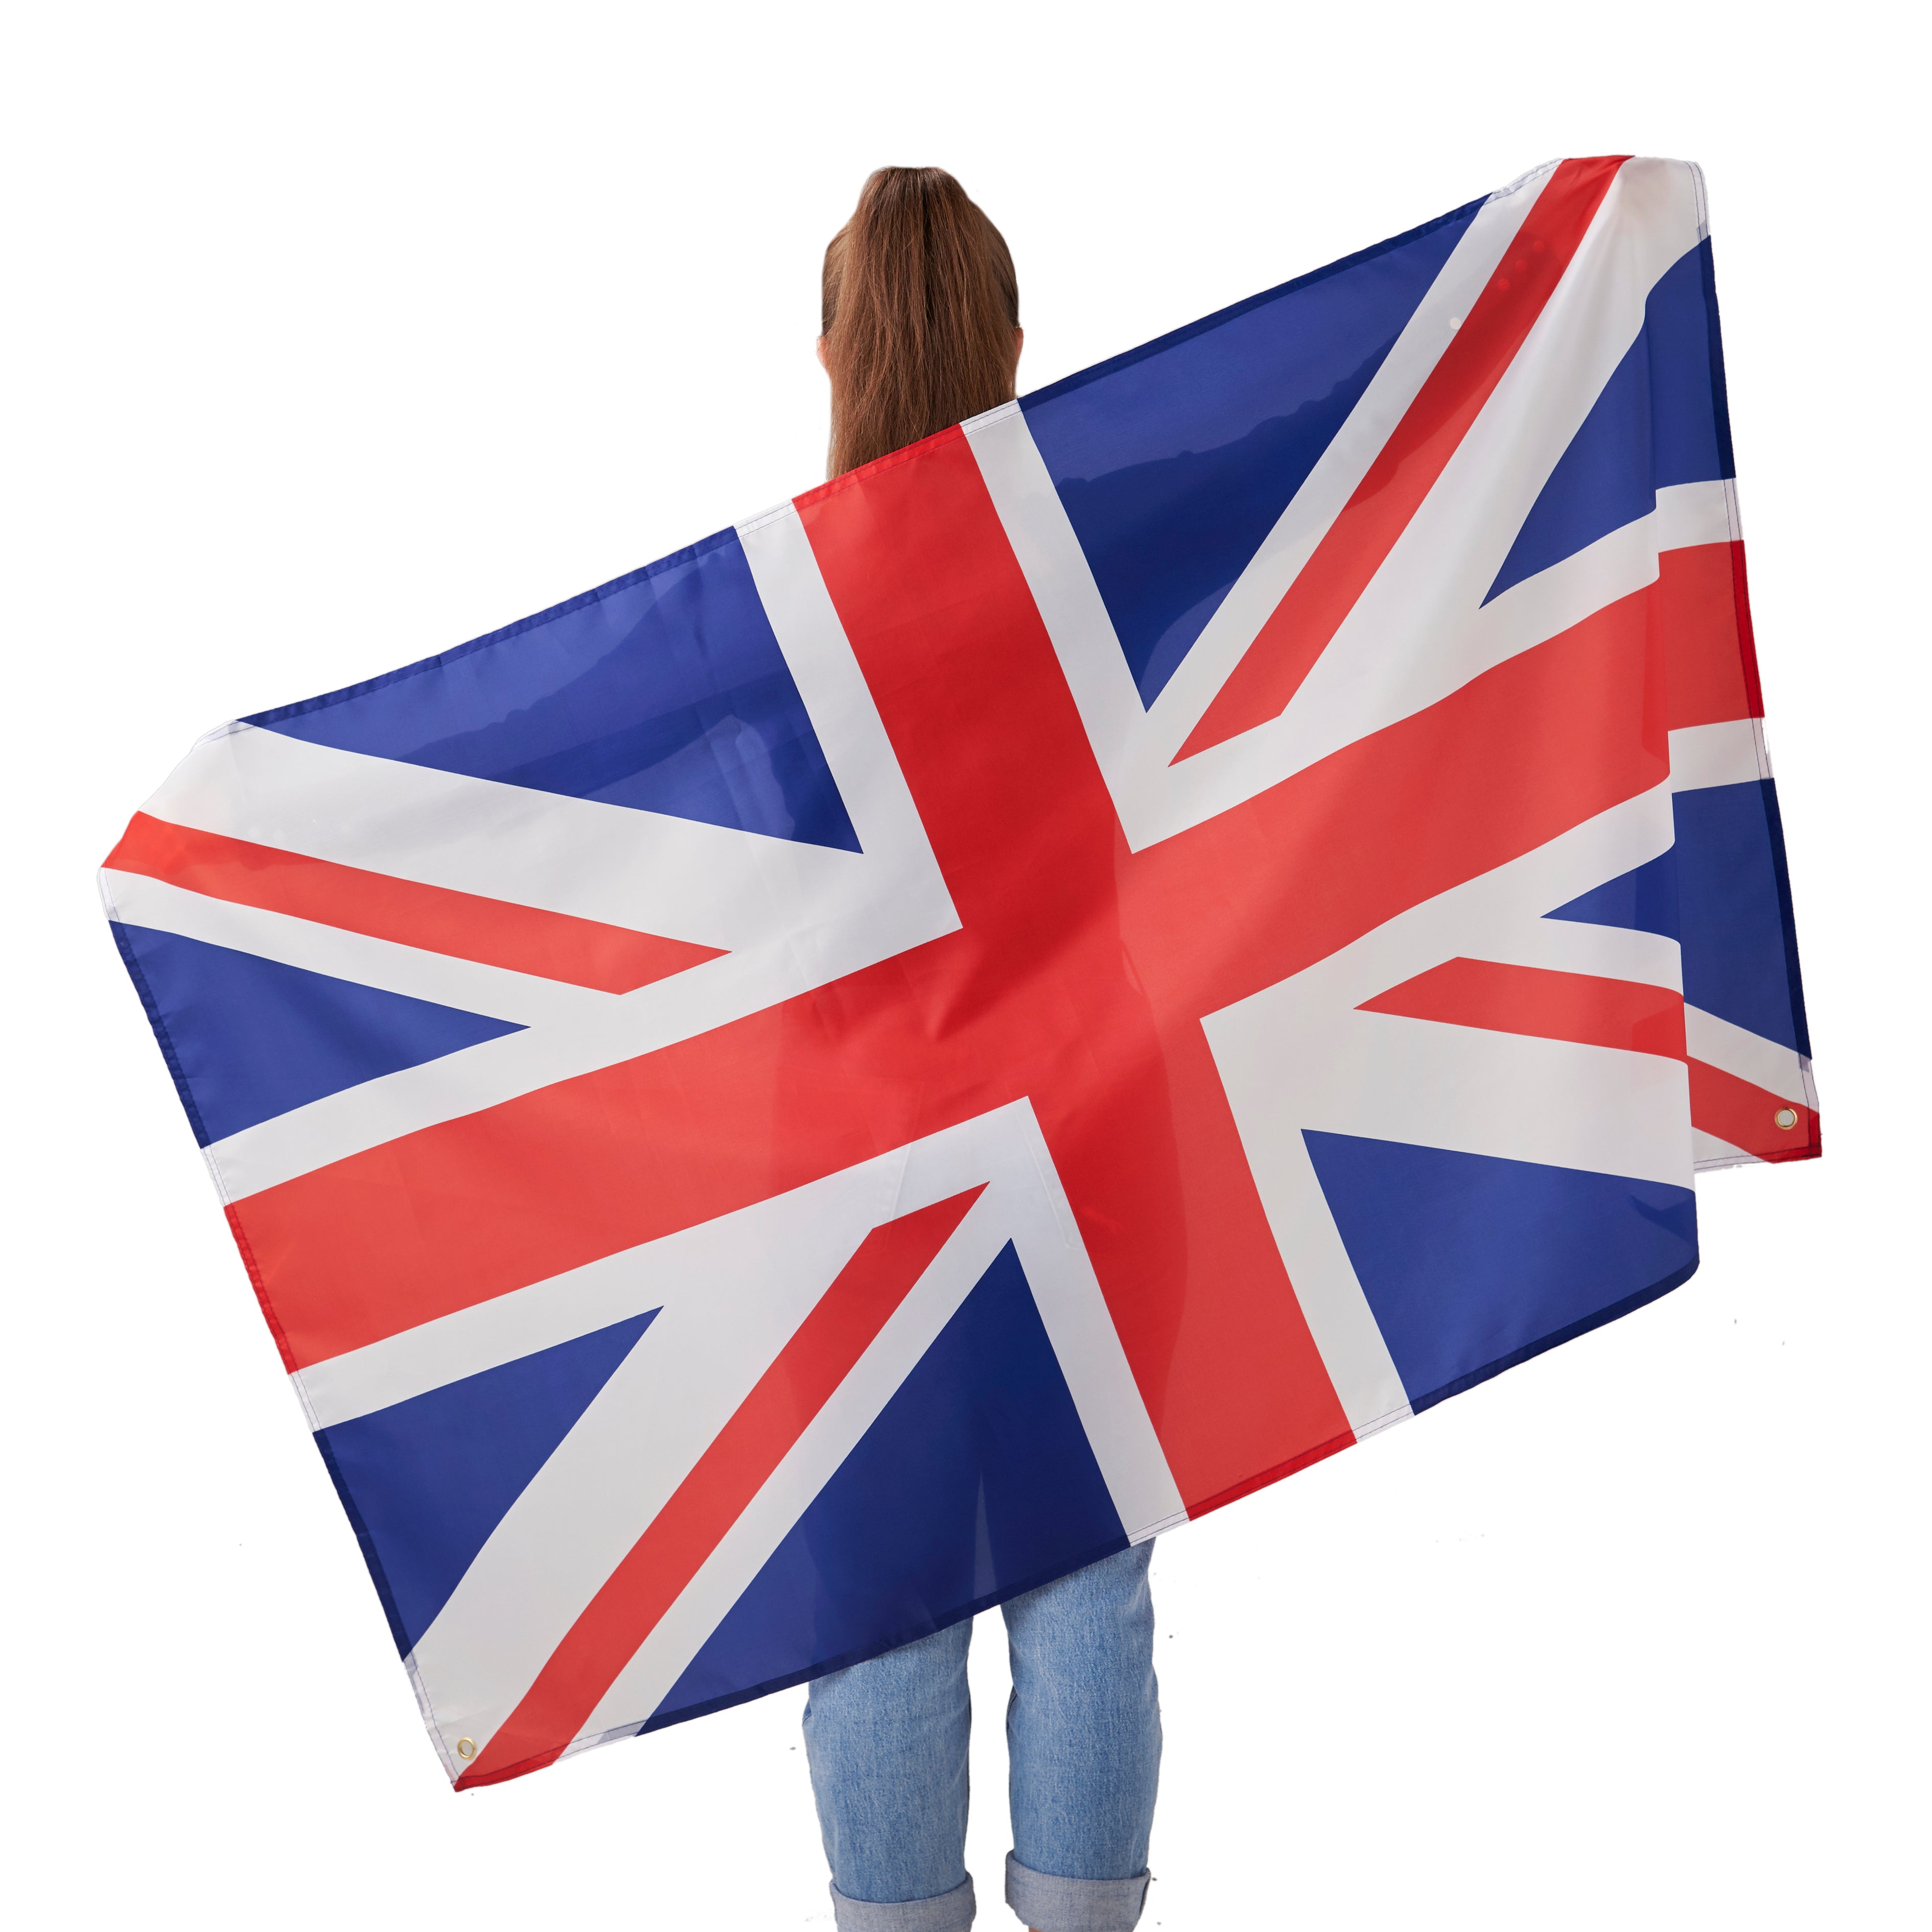 RuneSol Premium Large 5x3ft UK and REGIONAL Flags